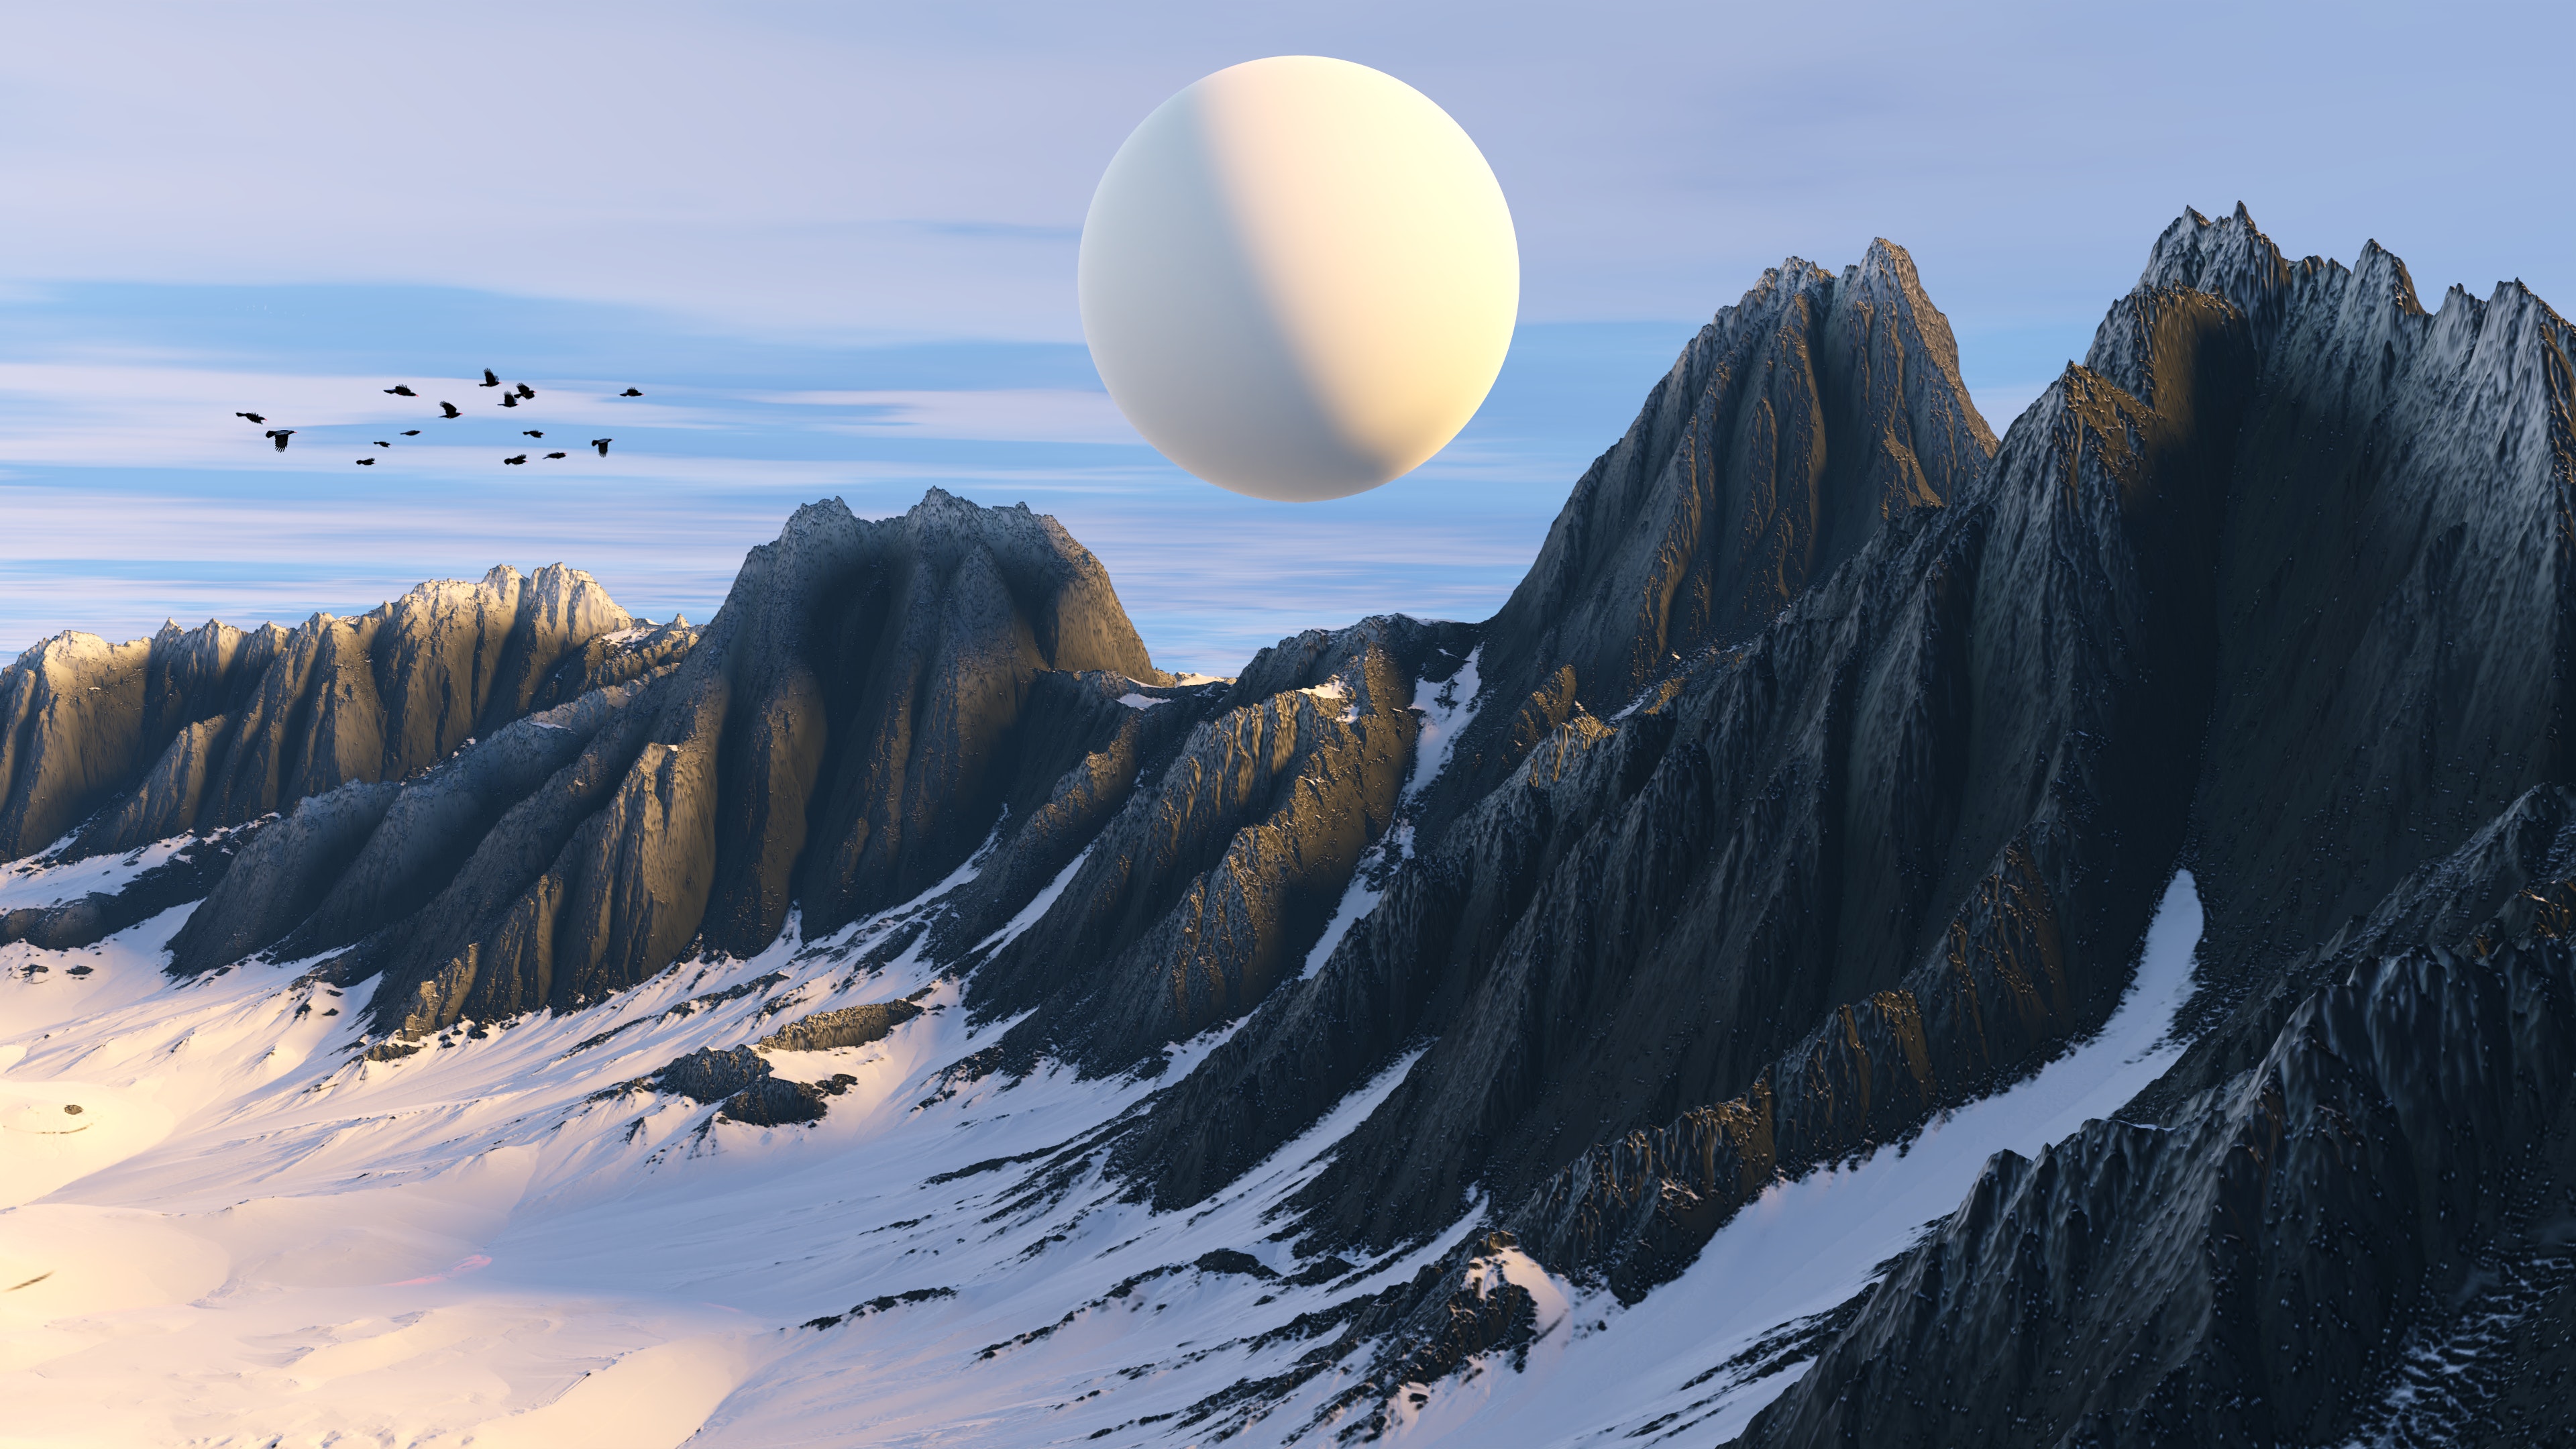 Digital Digital Art Artwork Illustration Mountains Landscape Snow Planet Abstract 3D Nature Birds 3840x2160